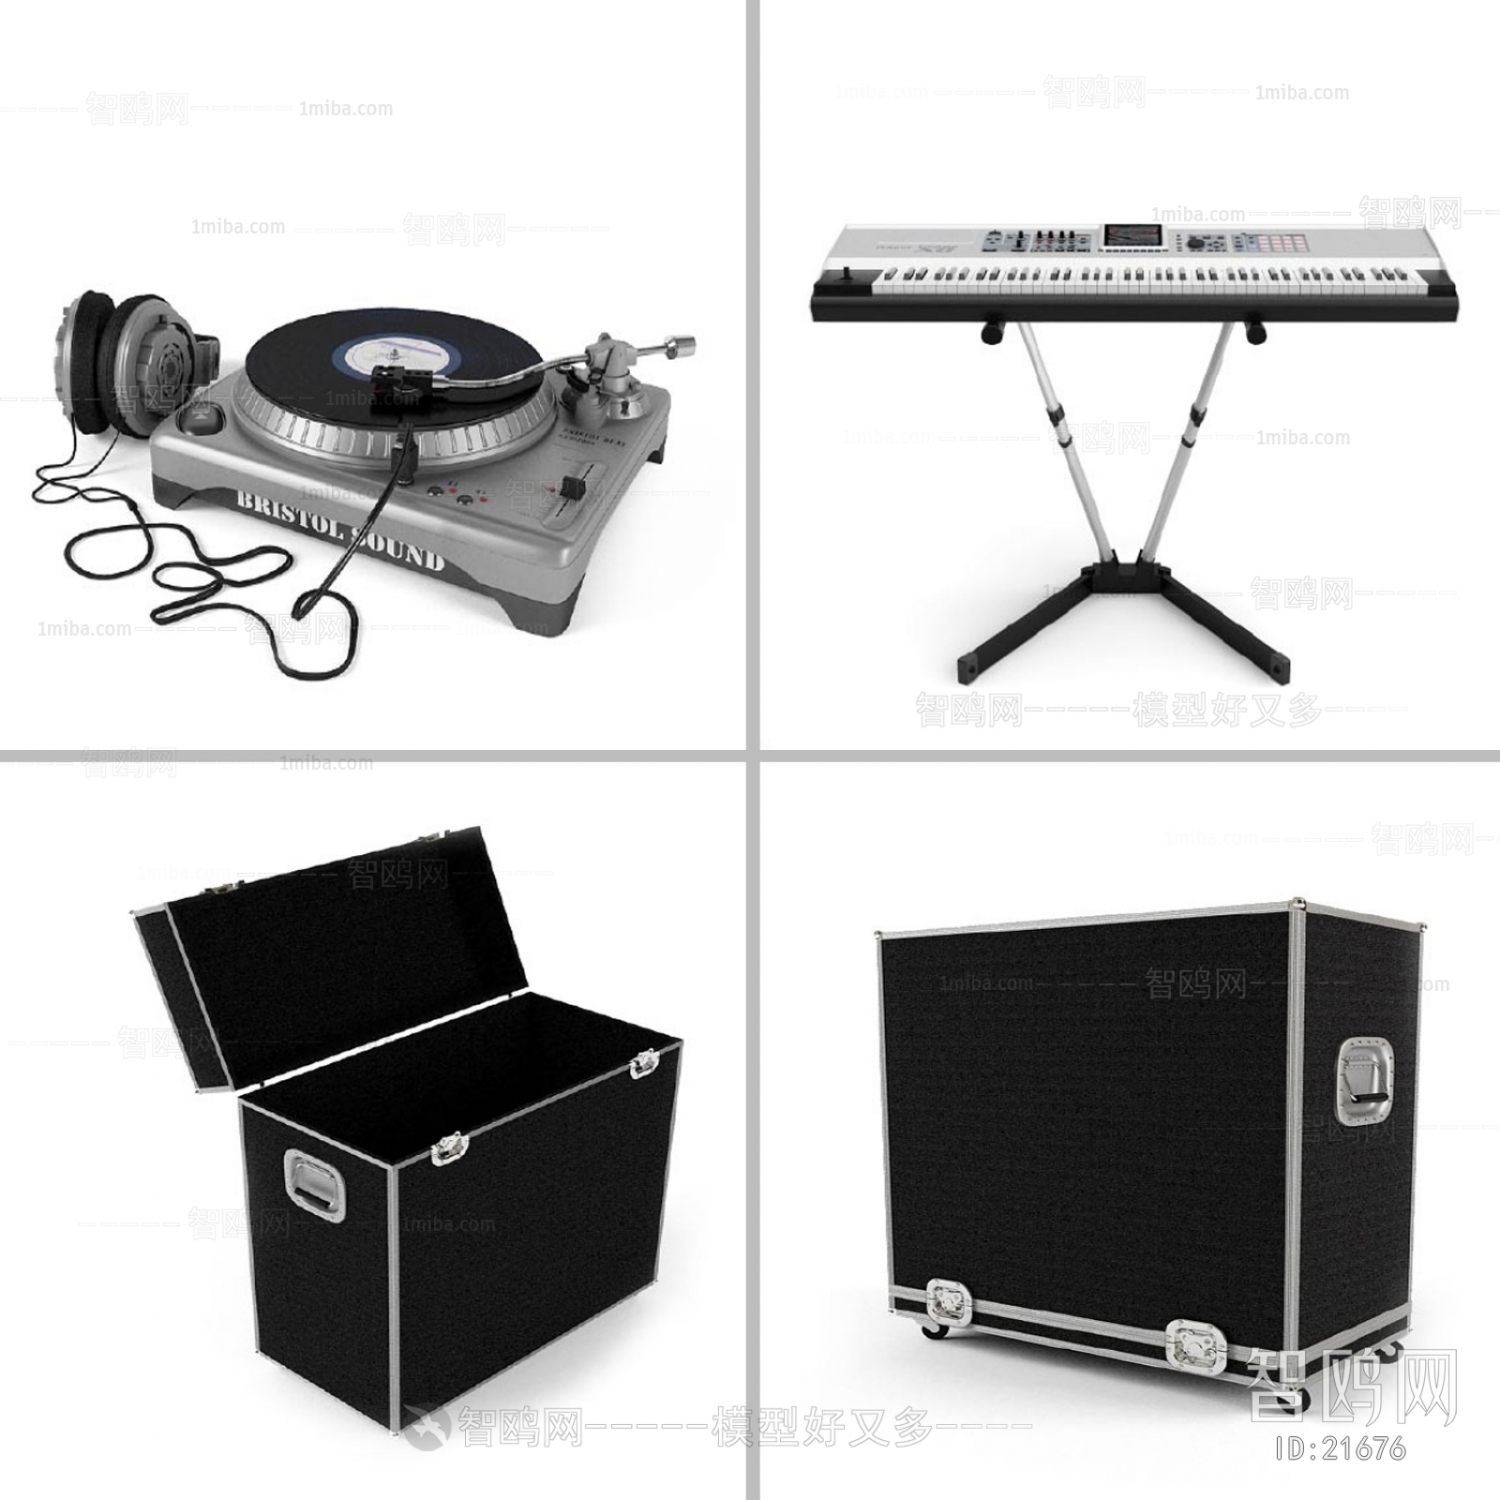 Modern Music Equipment